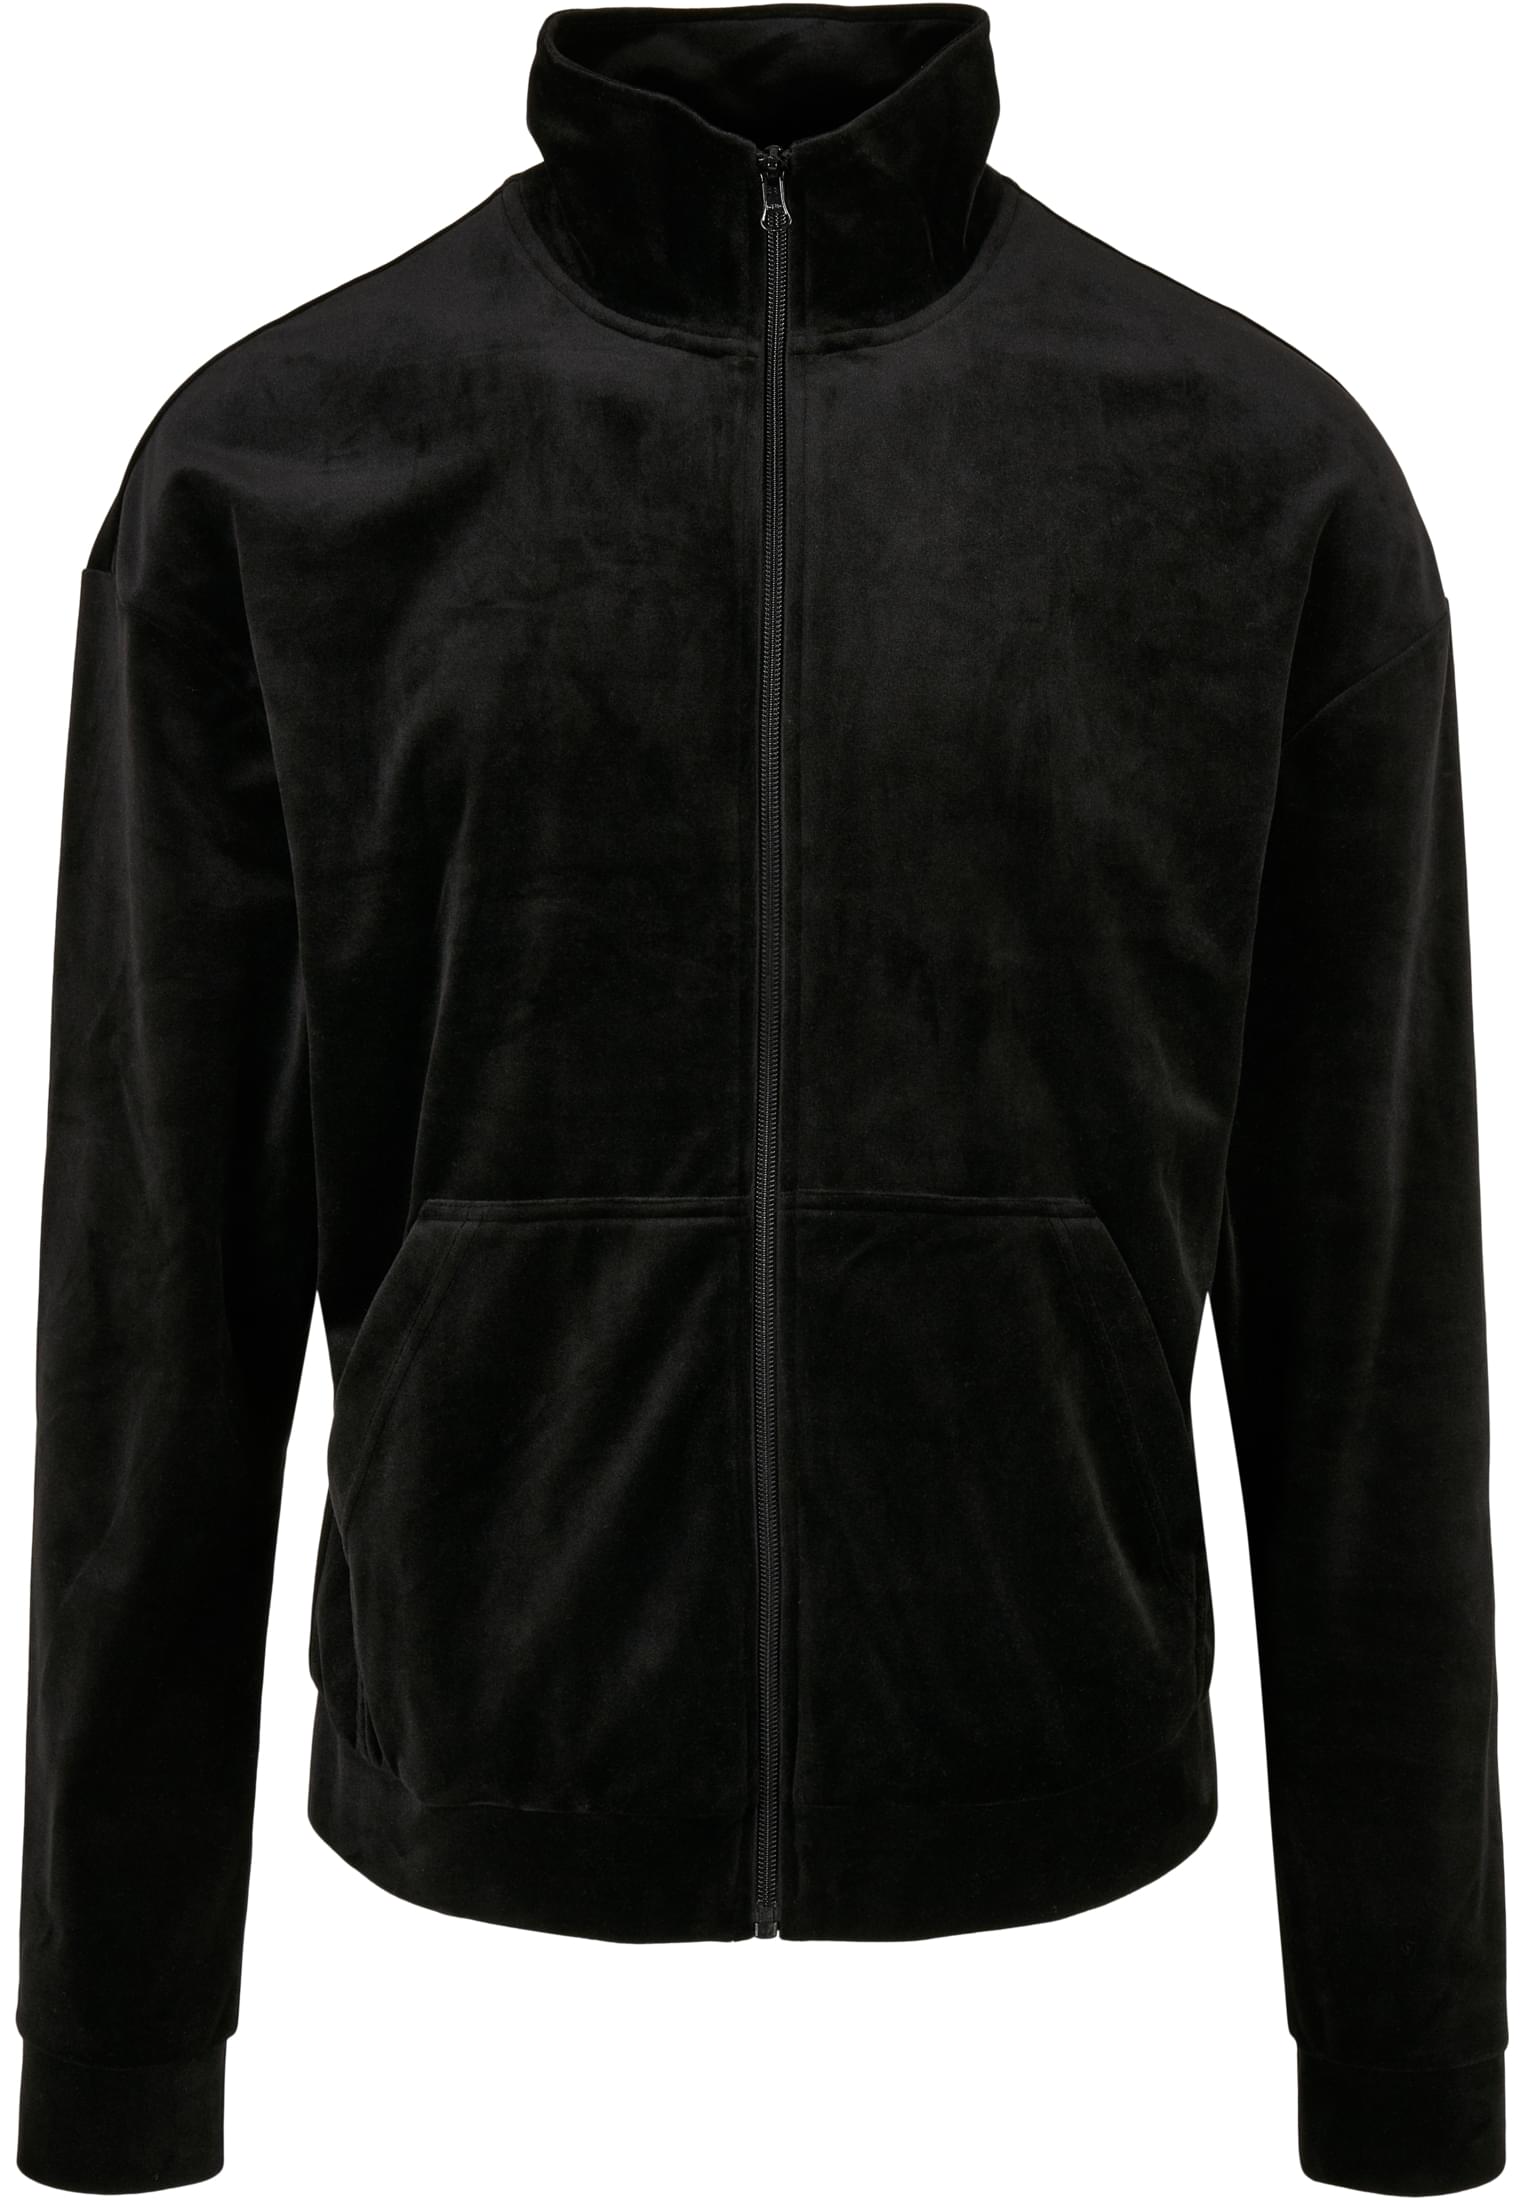 Leichte Jacken Velvet Jacket in Farbe black